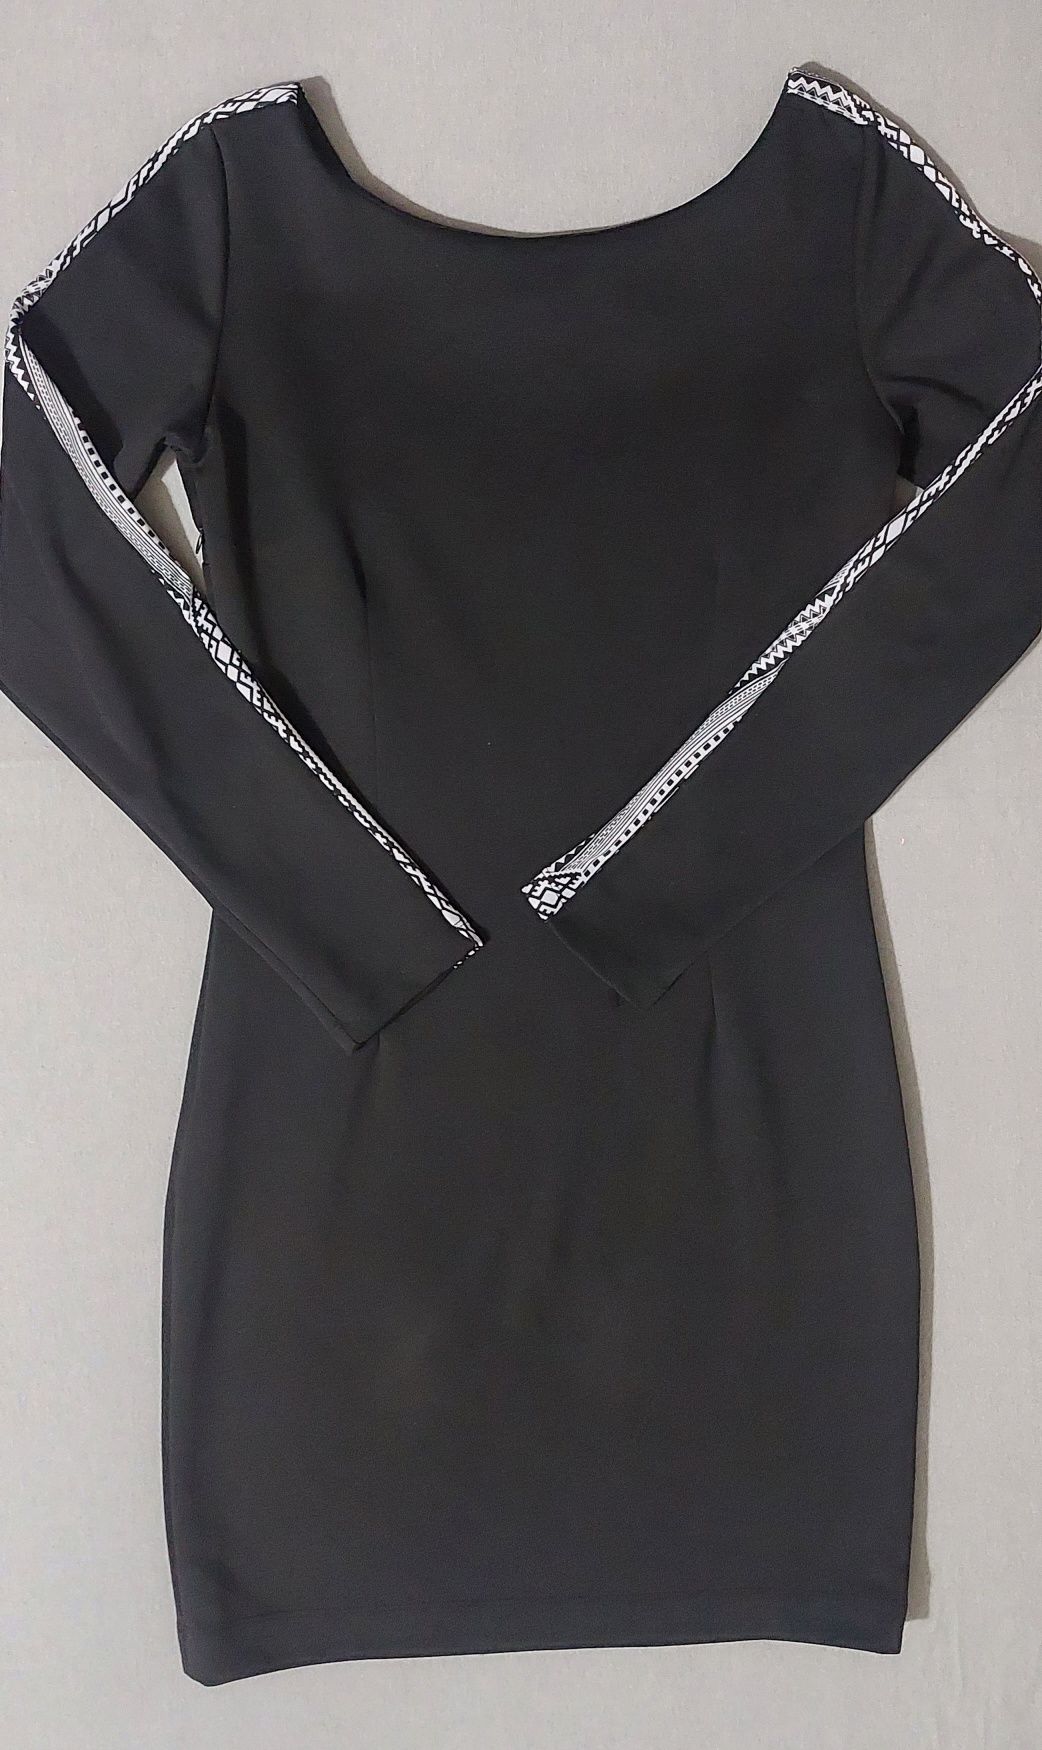 Sukienka M 38 Top Secret czarna z wzorem lampasy. Tylko inpost, orlen